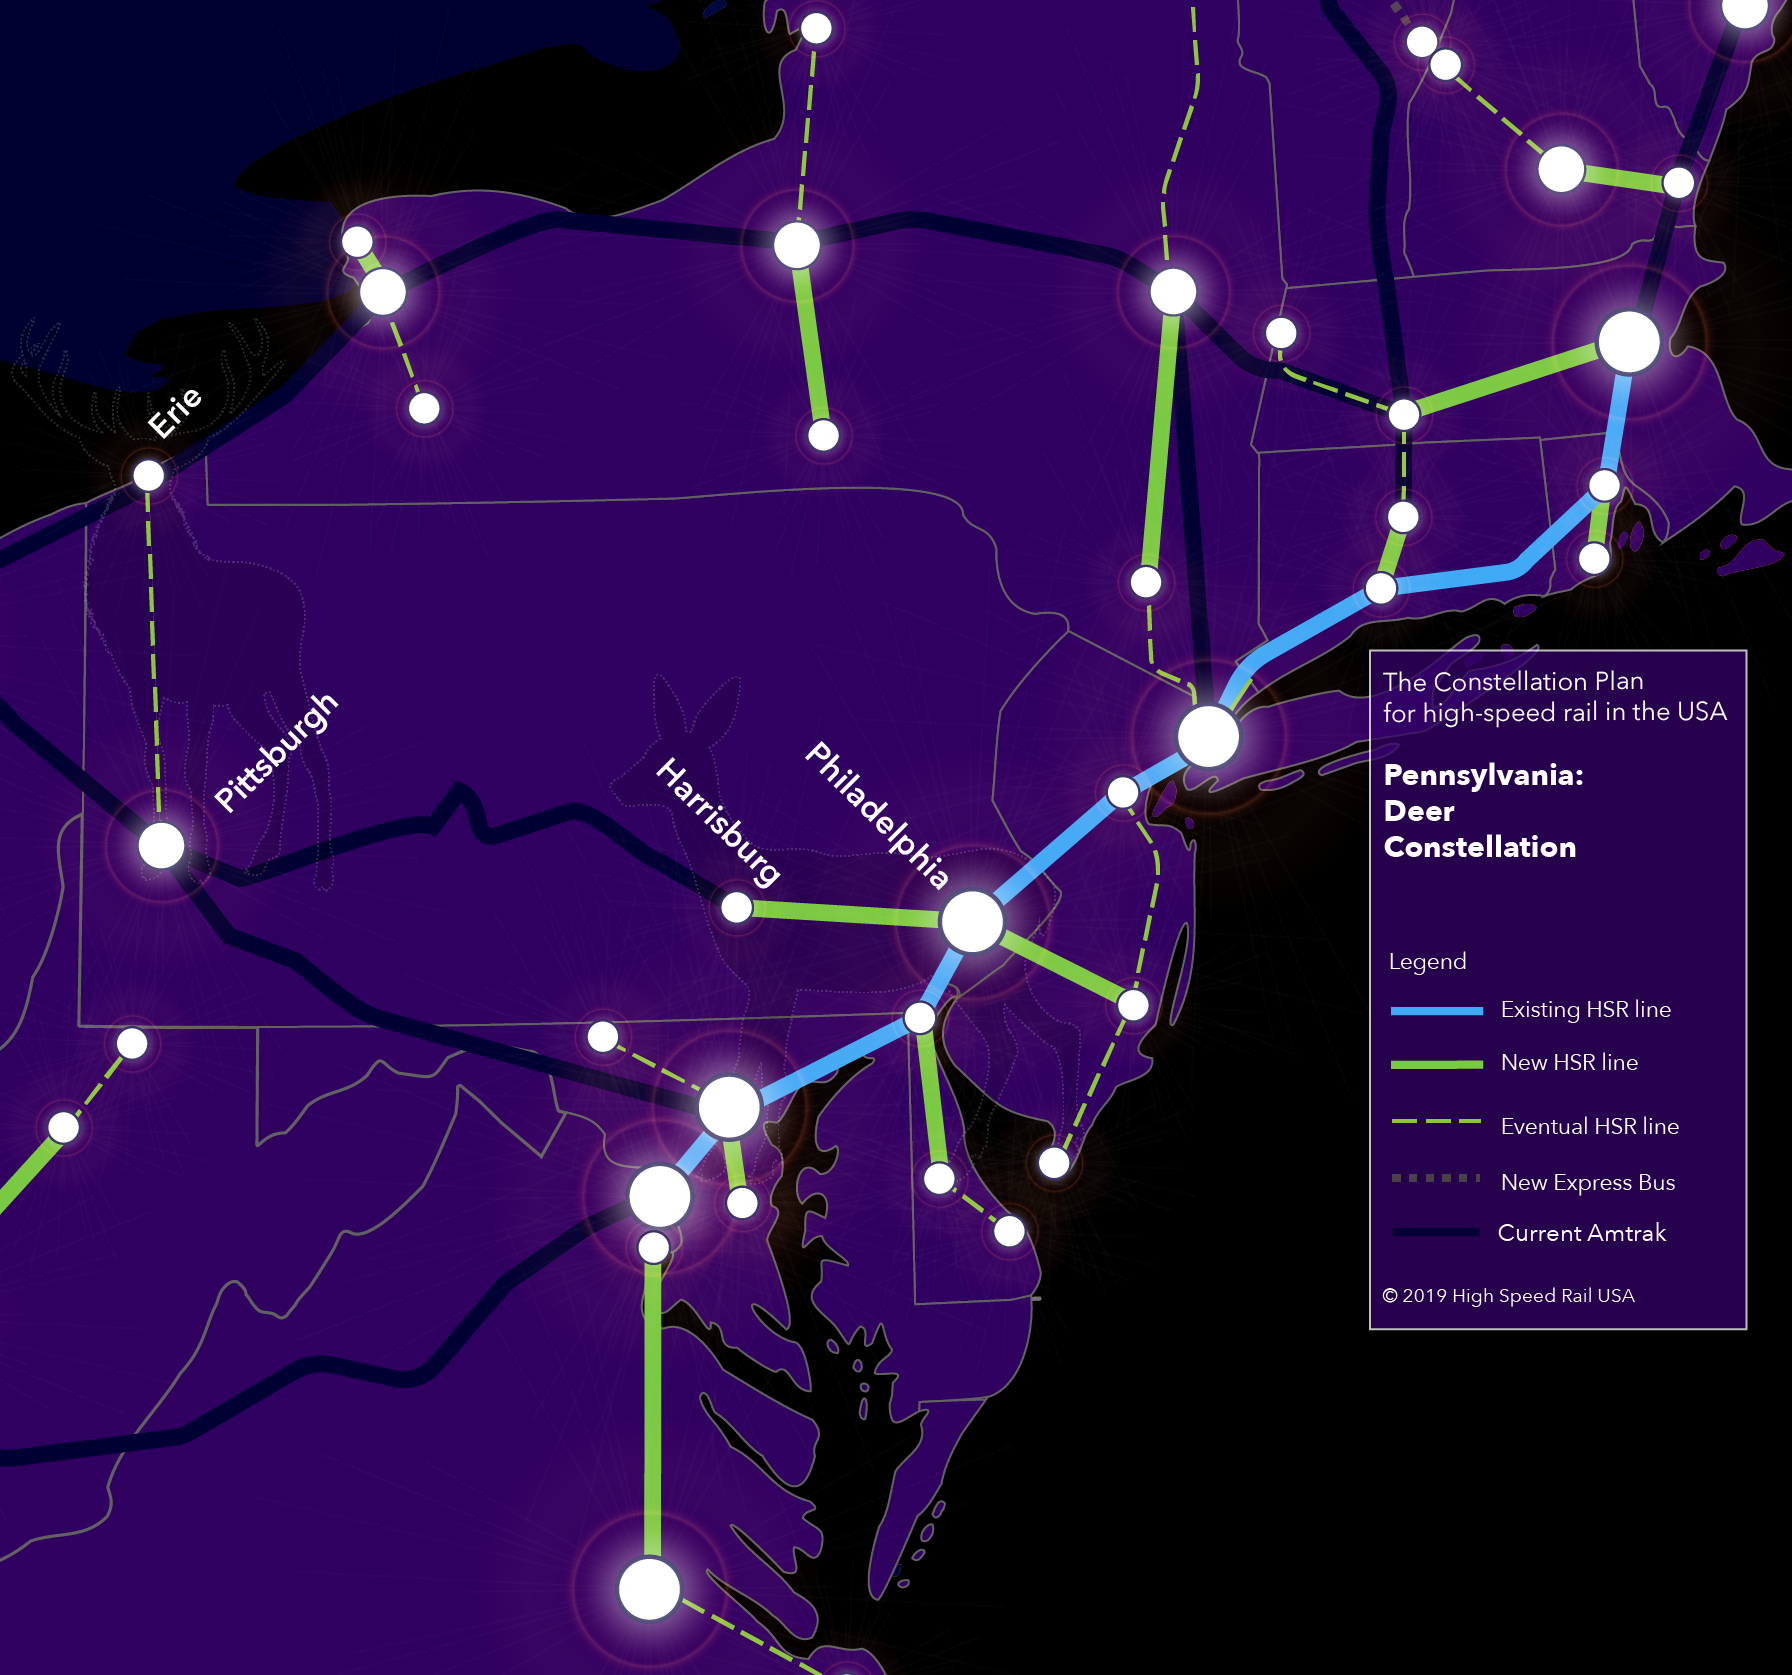 Pennsylvania - The Deer Constellation for high-speed rail